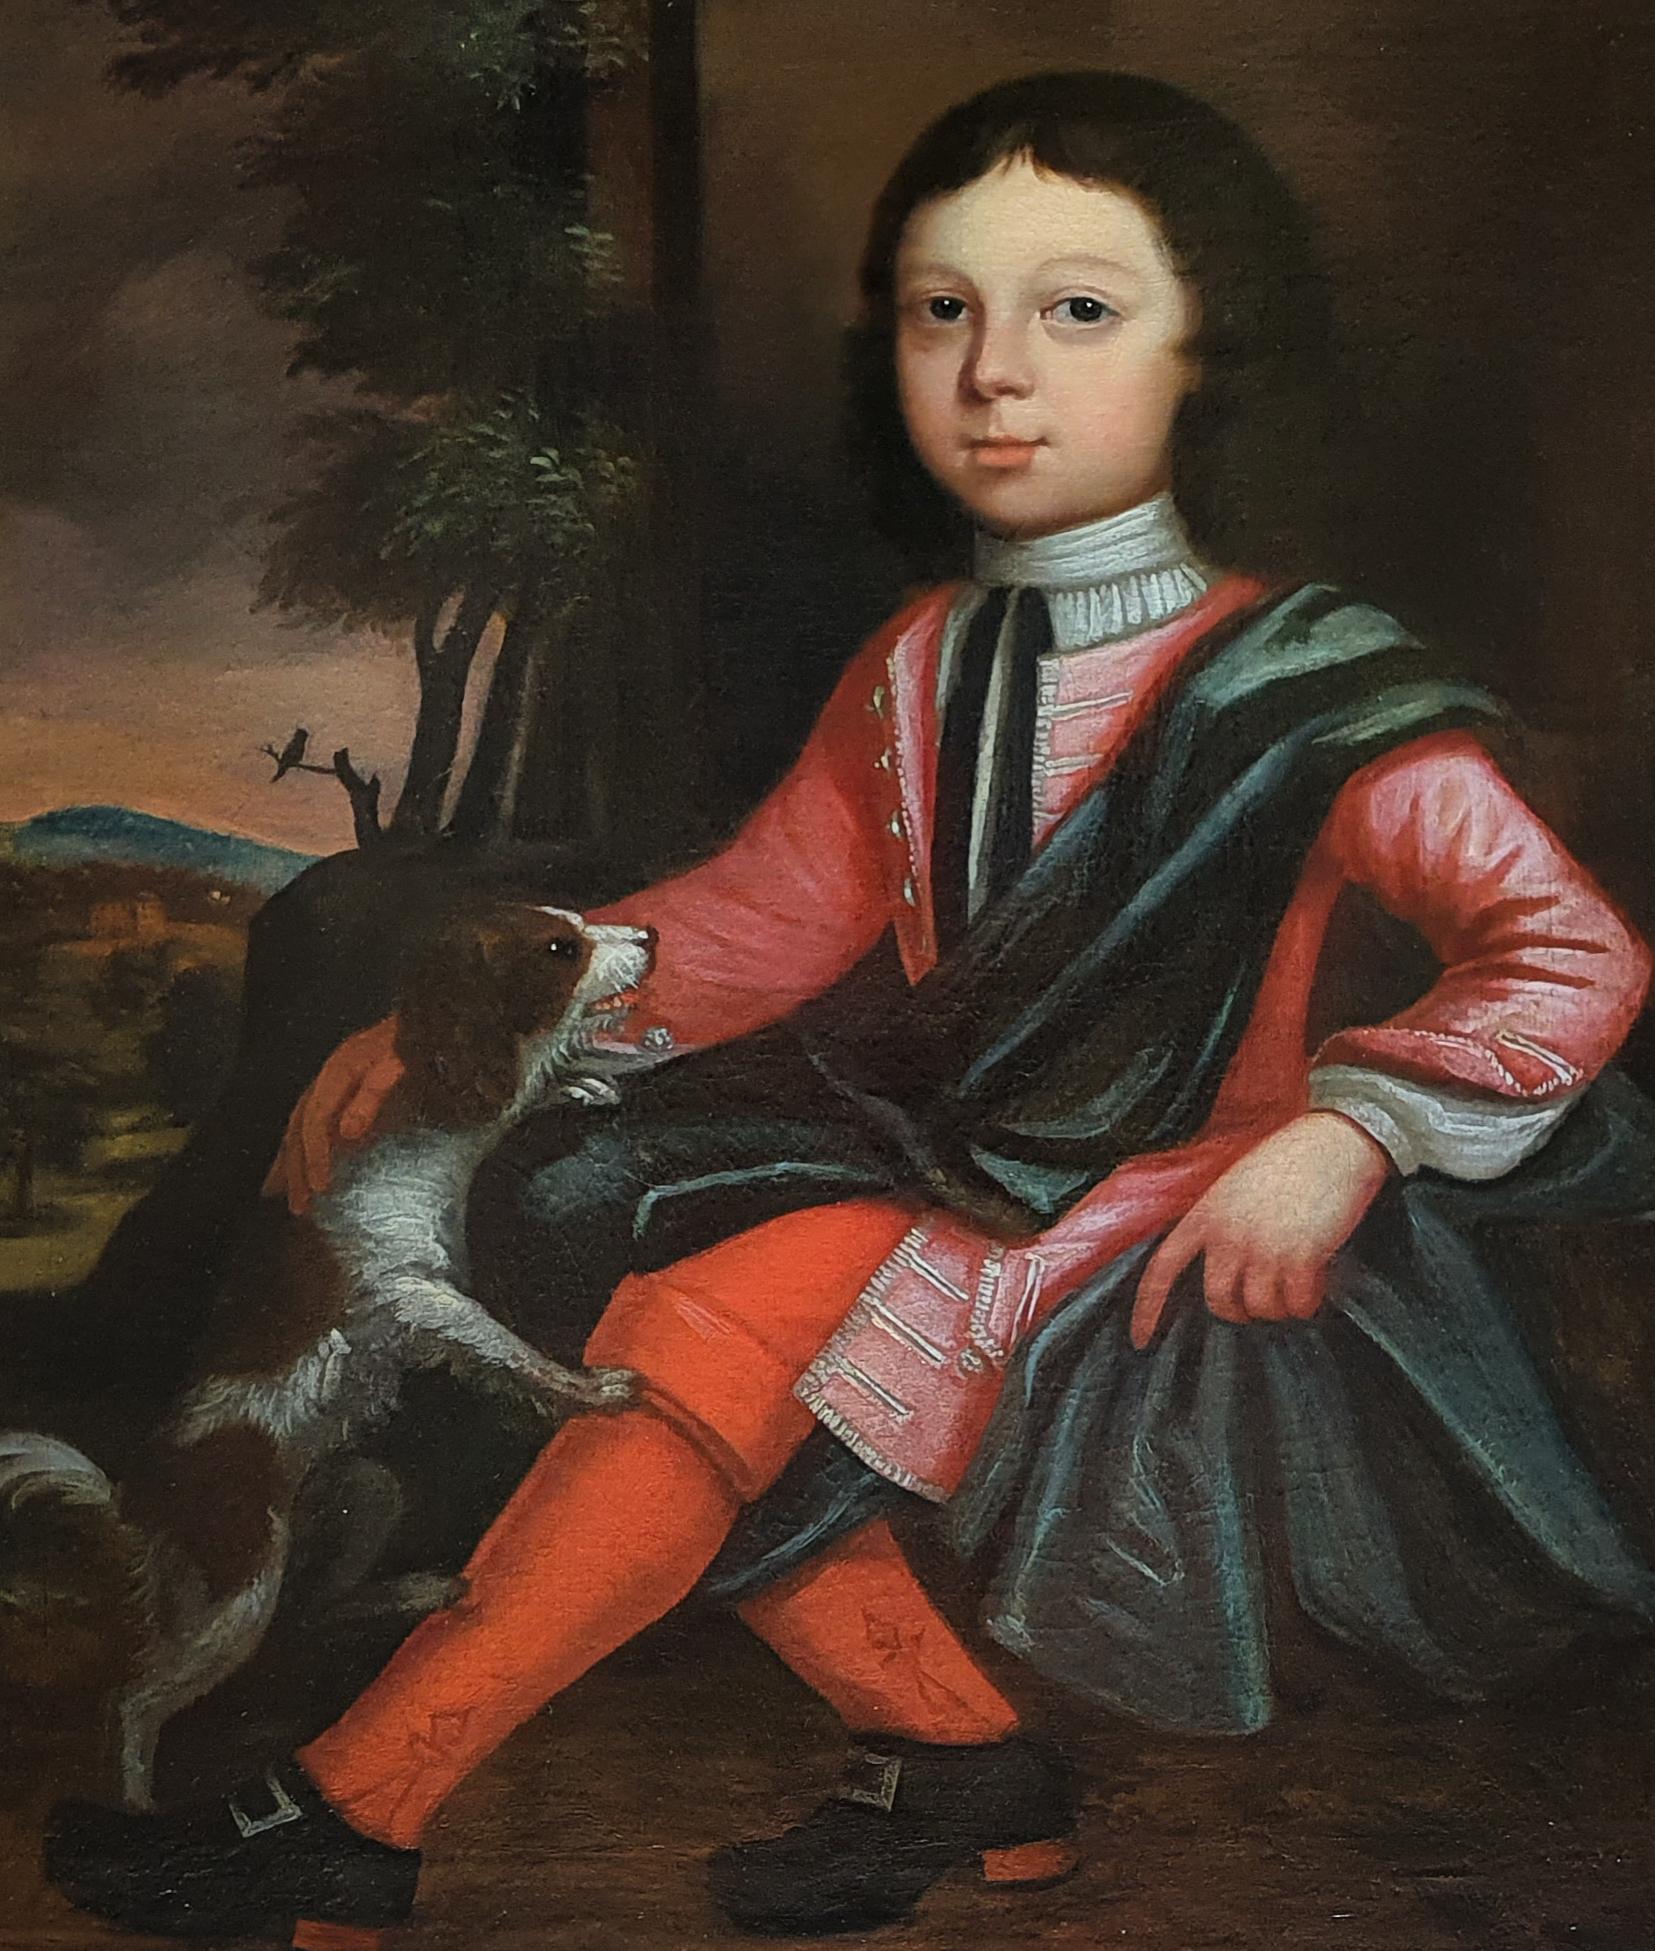 boy 17th century children's clothing